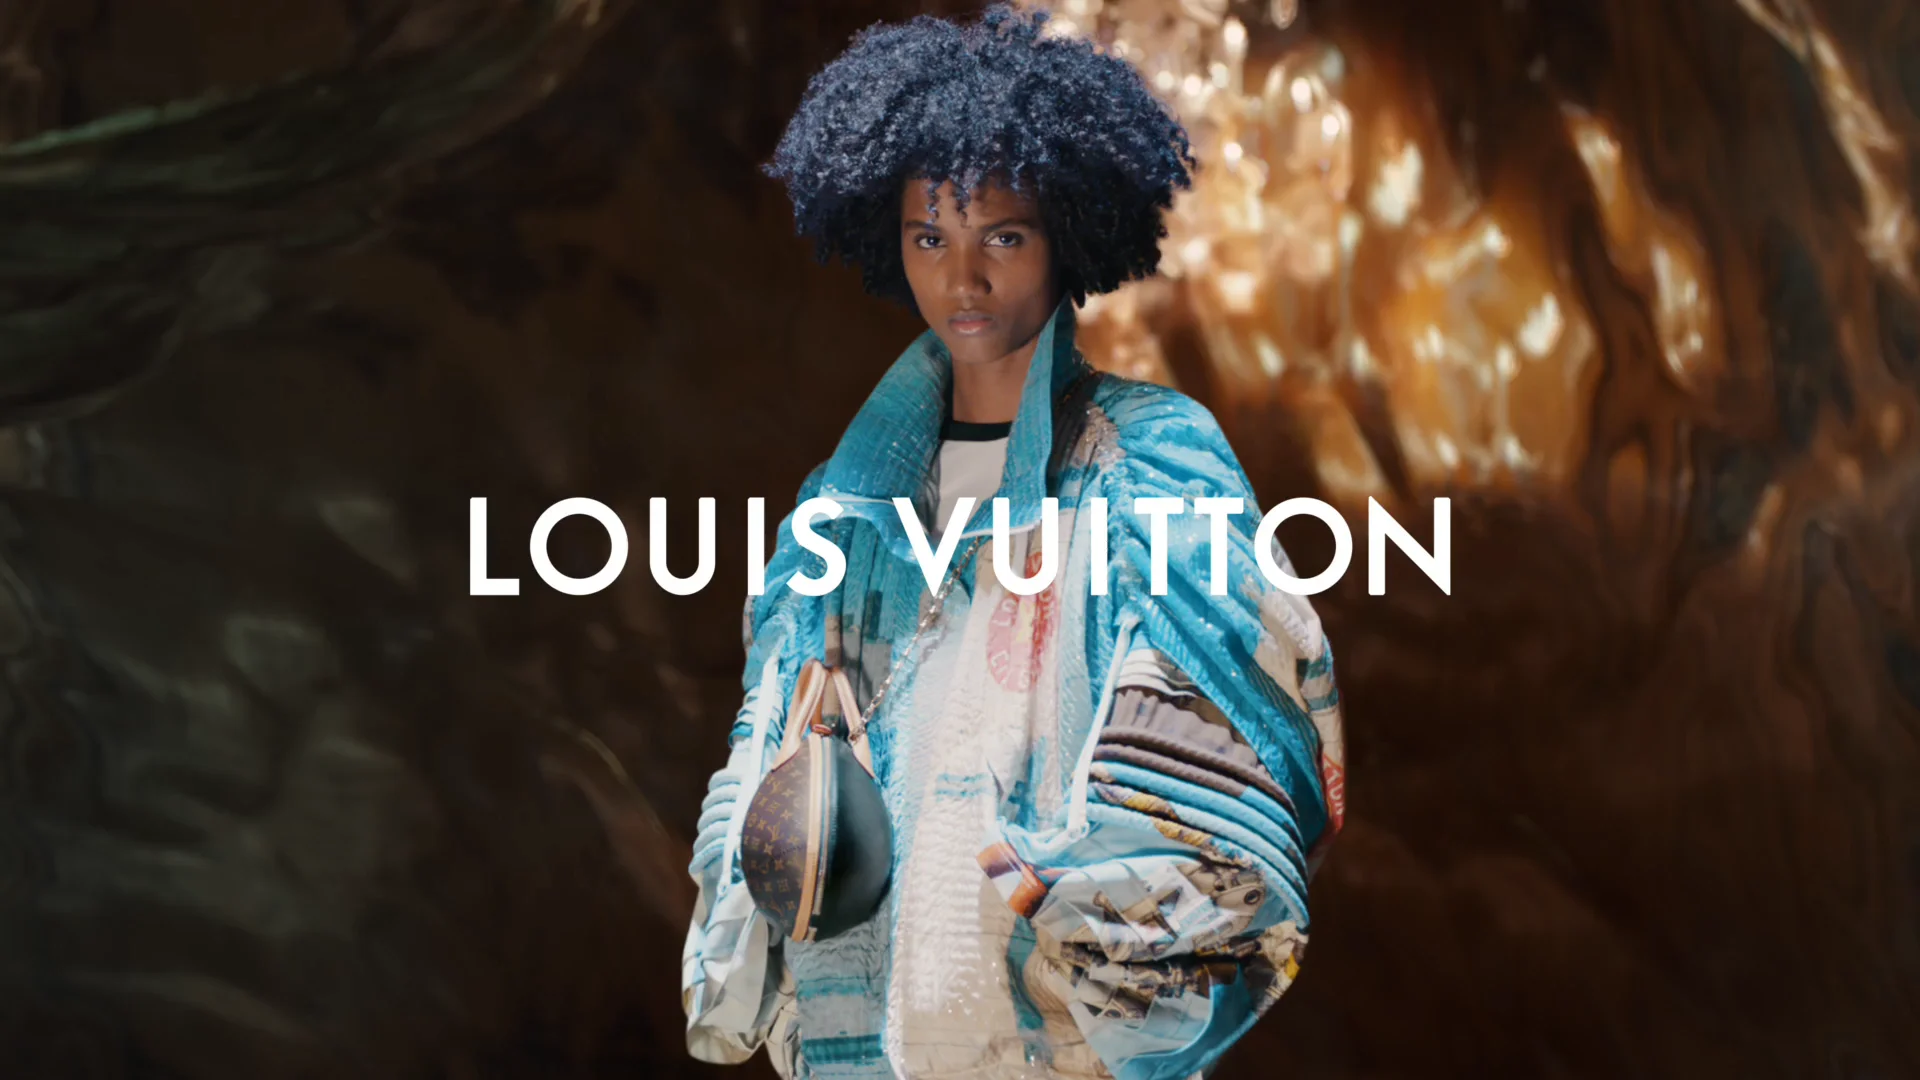 Louis Vuitton Women's Spring Summer 2019 On Vimeo